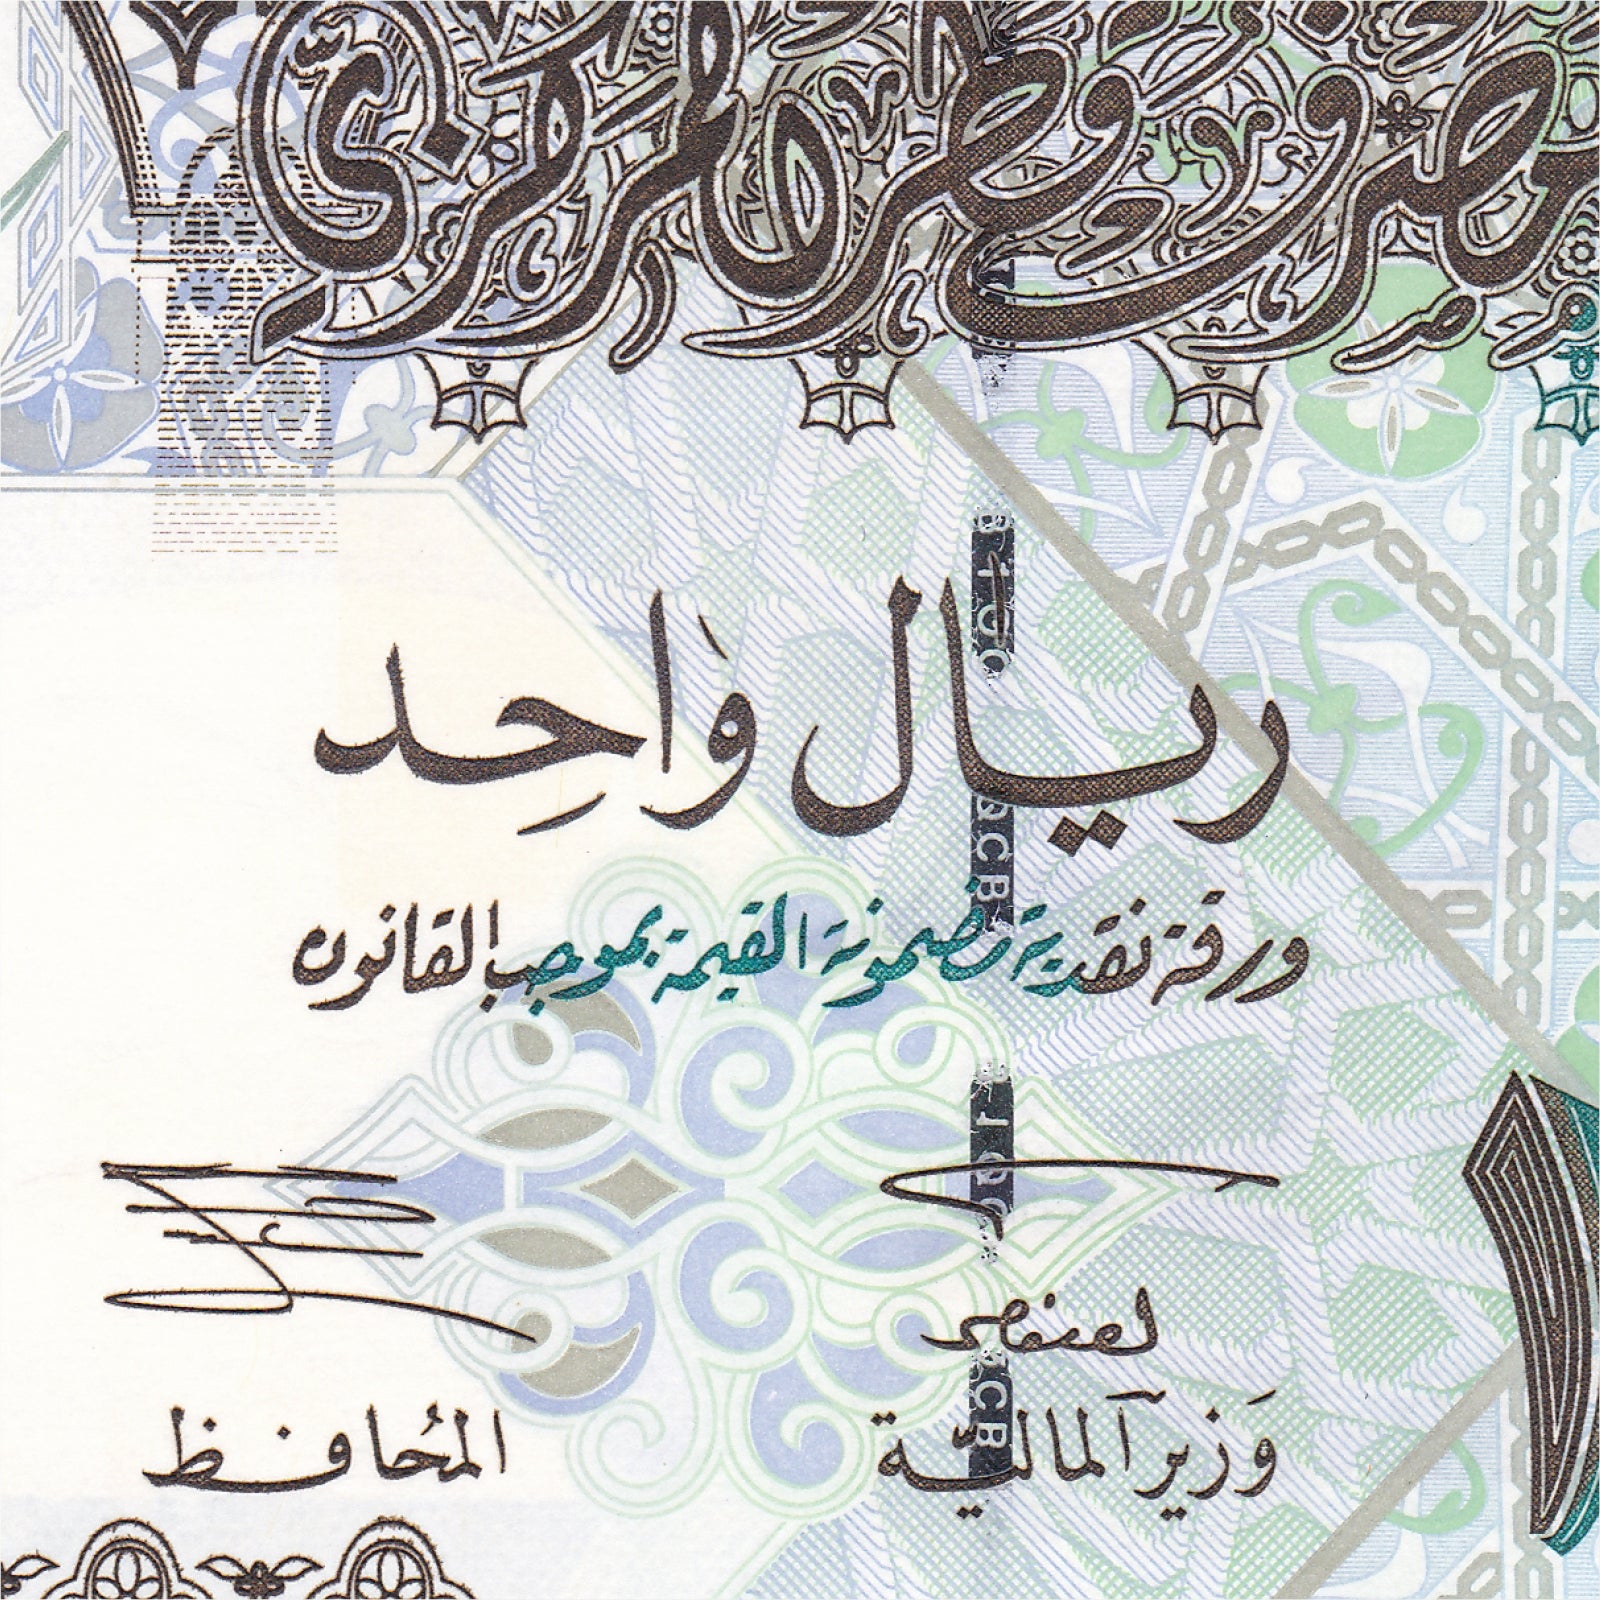 Qatar 1 Riyal, 2003, B207a, P20, UNC - Robert's World Money - World Banknotes